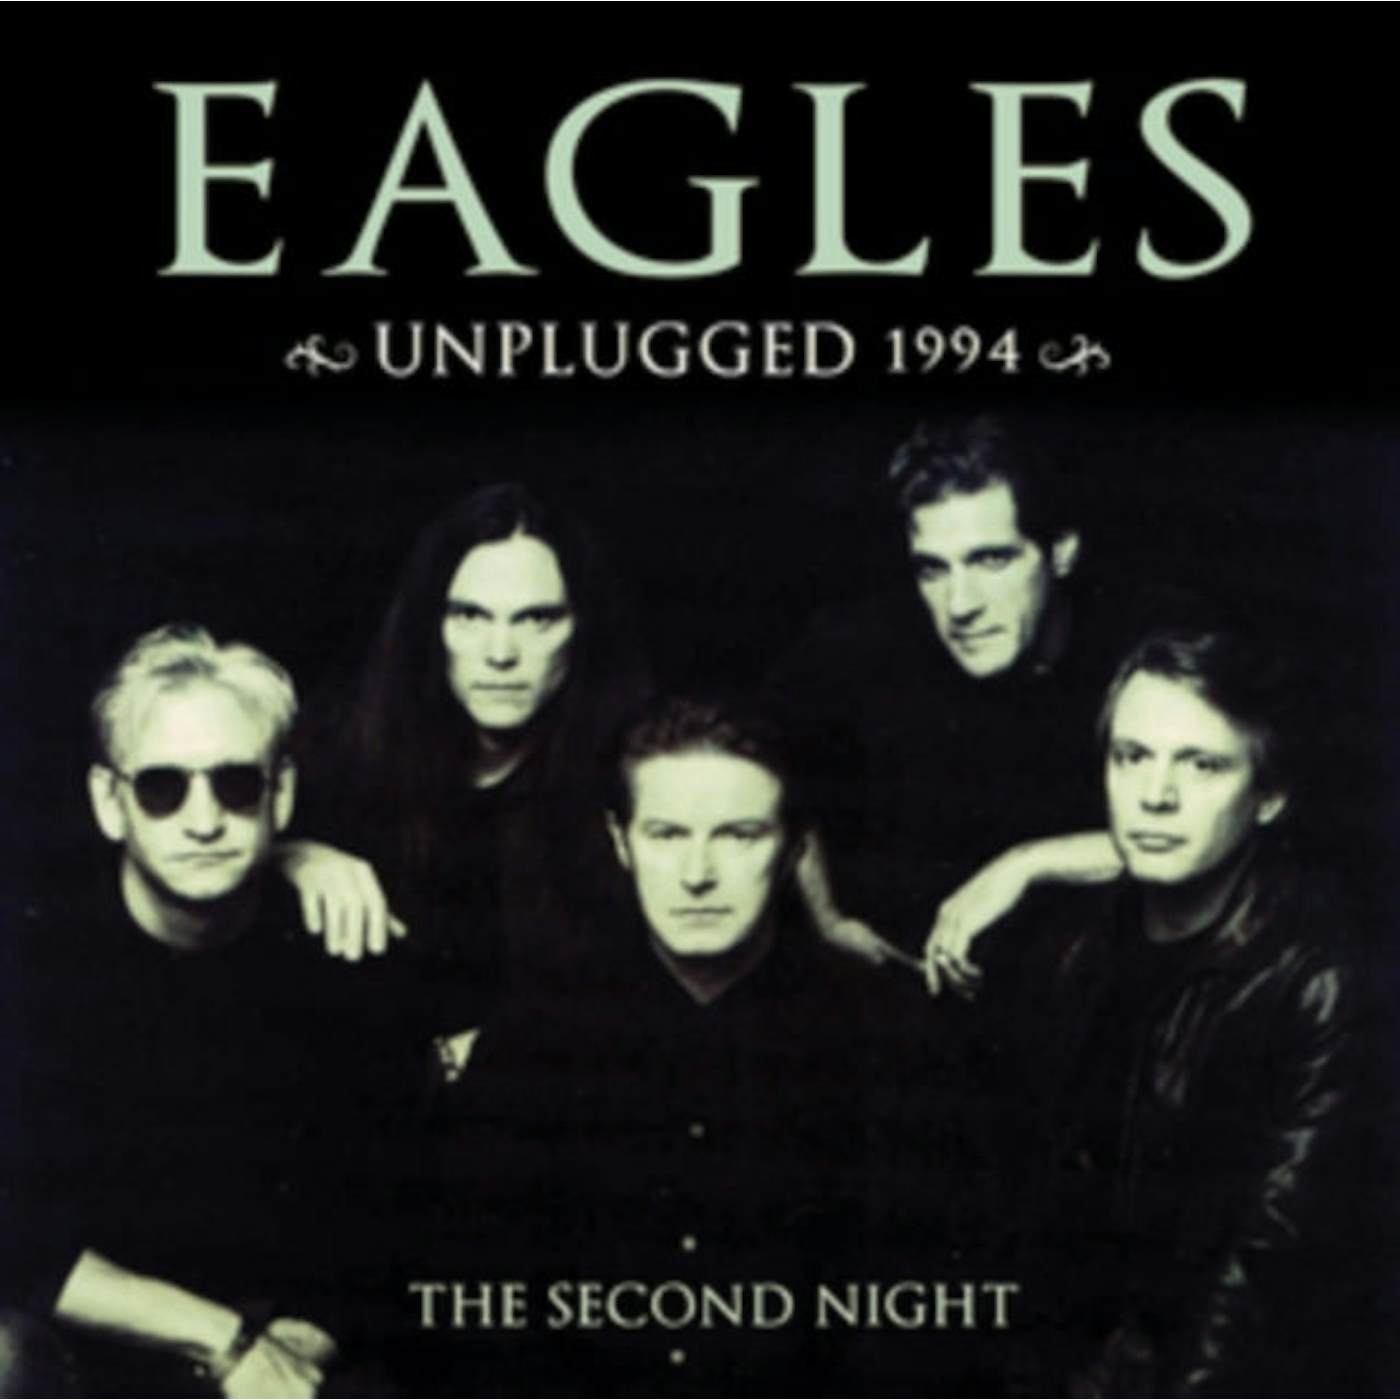 Eagles CD - Unplugged 1994 (2cd)